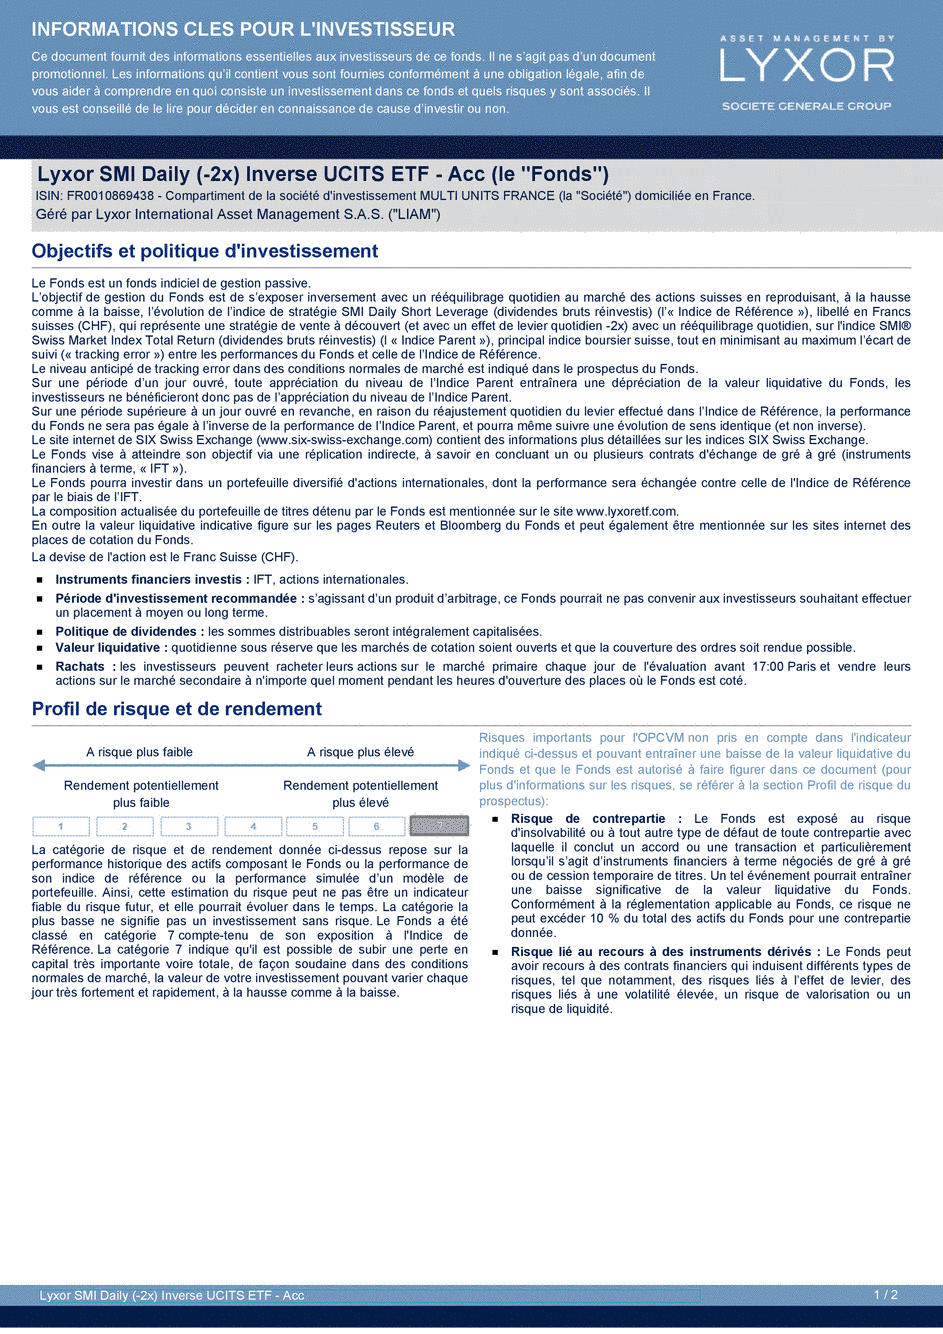 DICI Lyxor SMI Daily (-2x) Inverse UCITS ETF - Acc - 19/02/2020 - Français